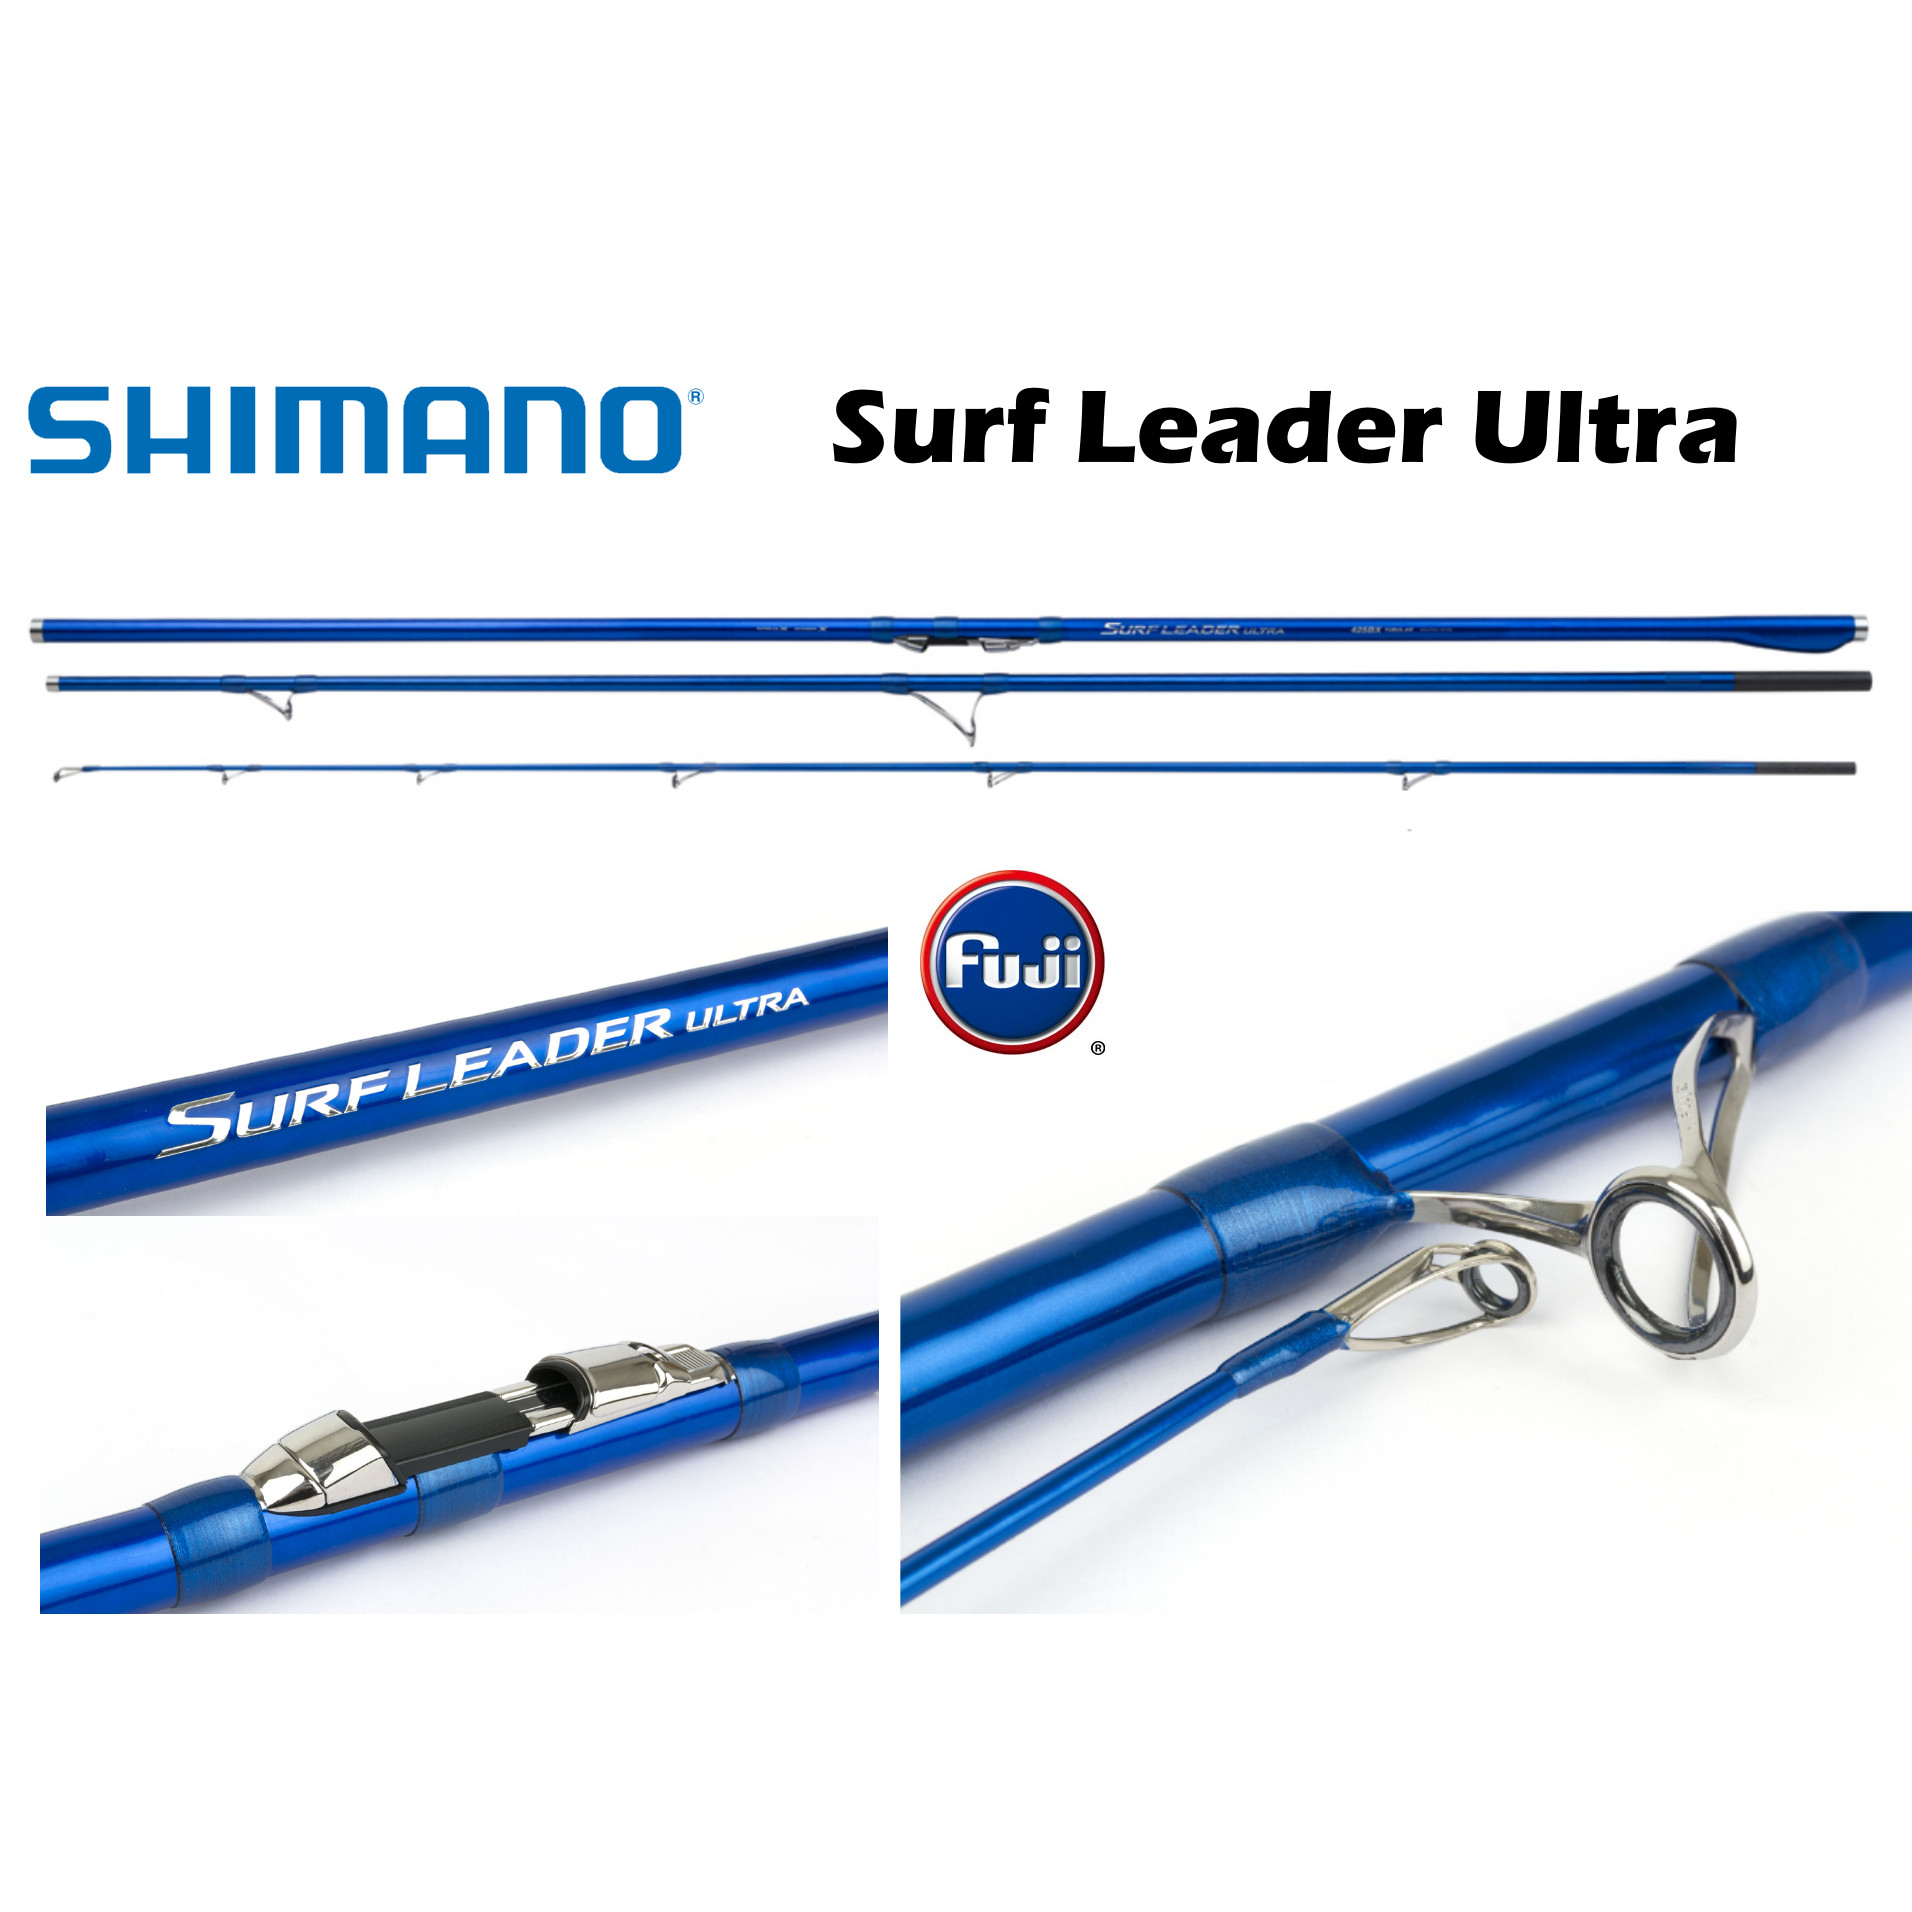 Cana Shimano Surf Leader Ultra